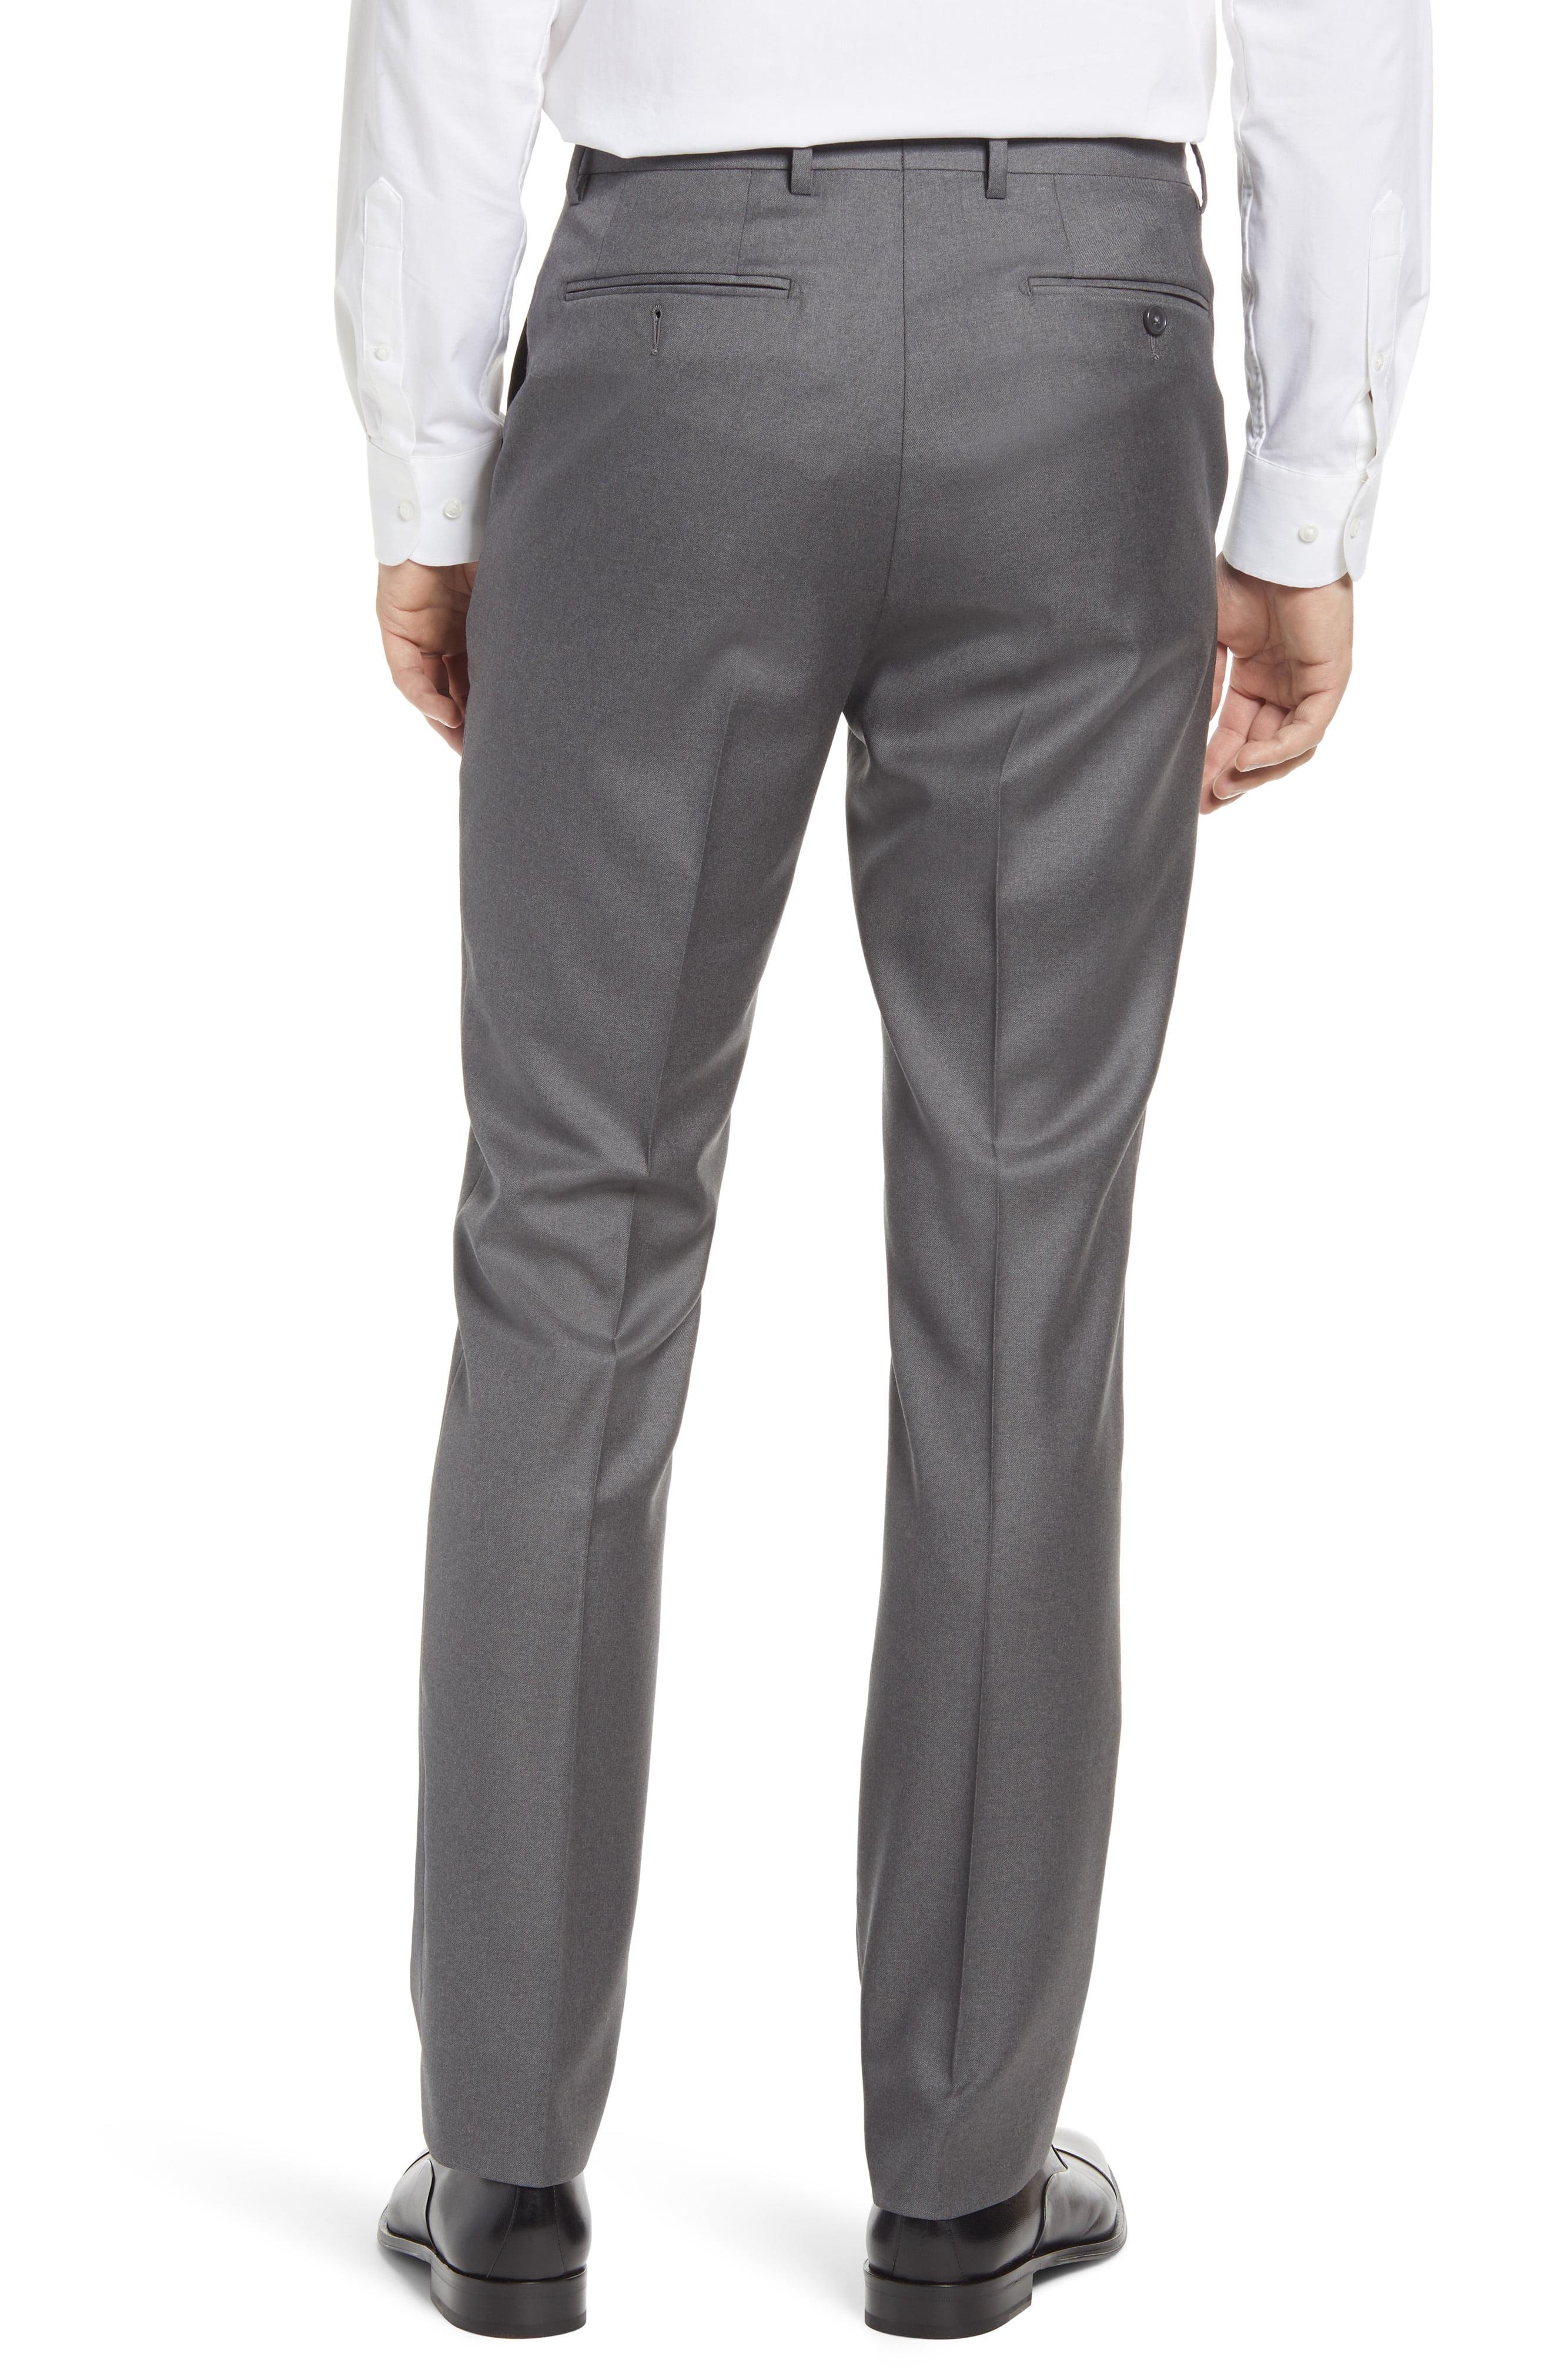 Santorelli Roma Flat Front Wool Dress Pants in Grey (Gray) for Men - Lyst